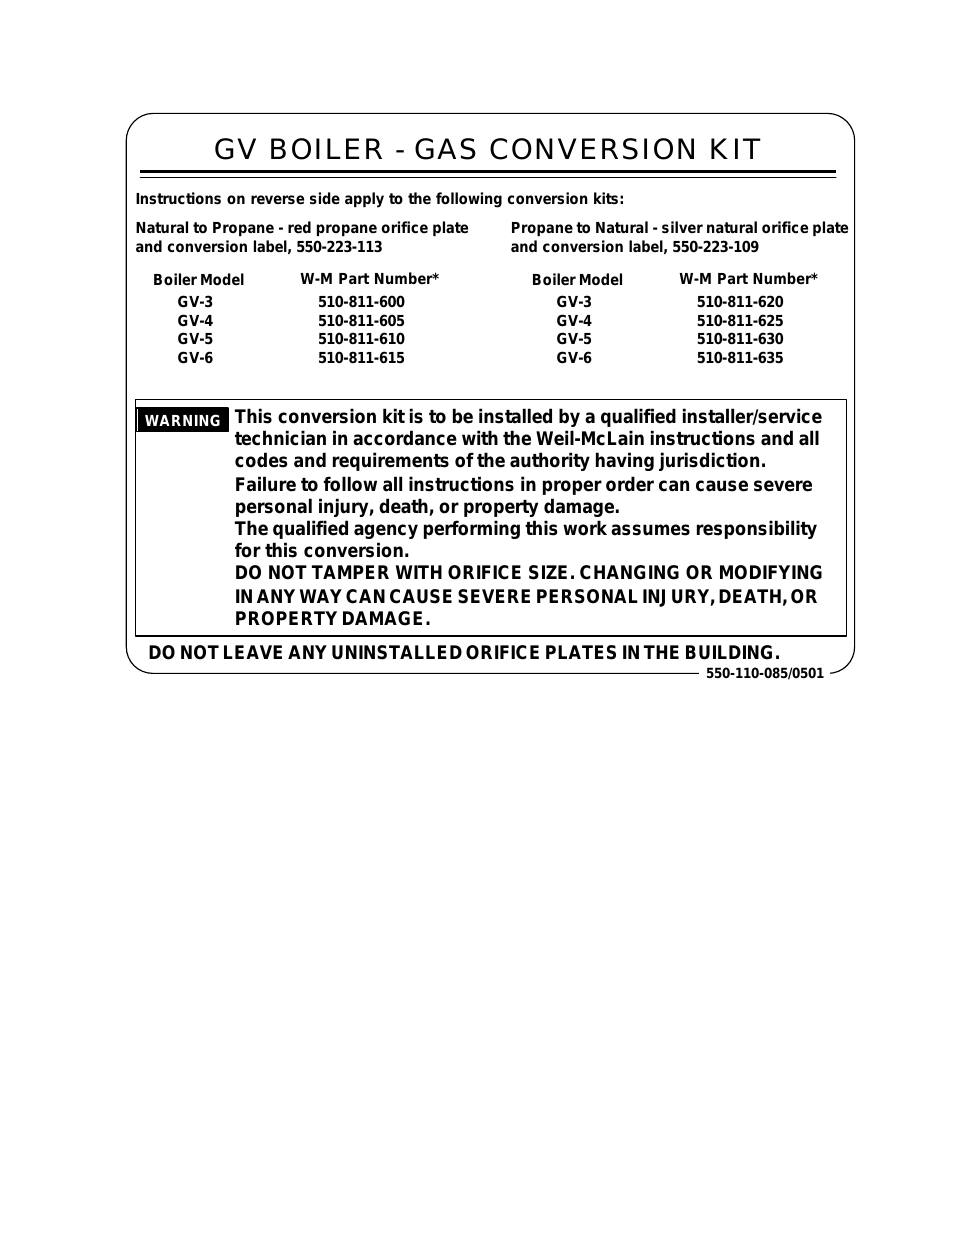 GAS CONVERSION KIT GV-6 510-811-615